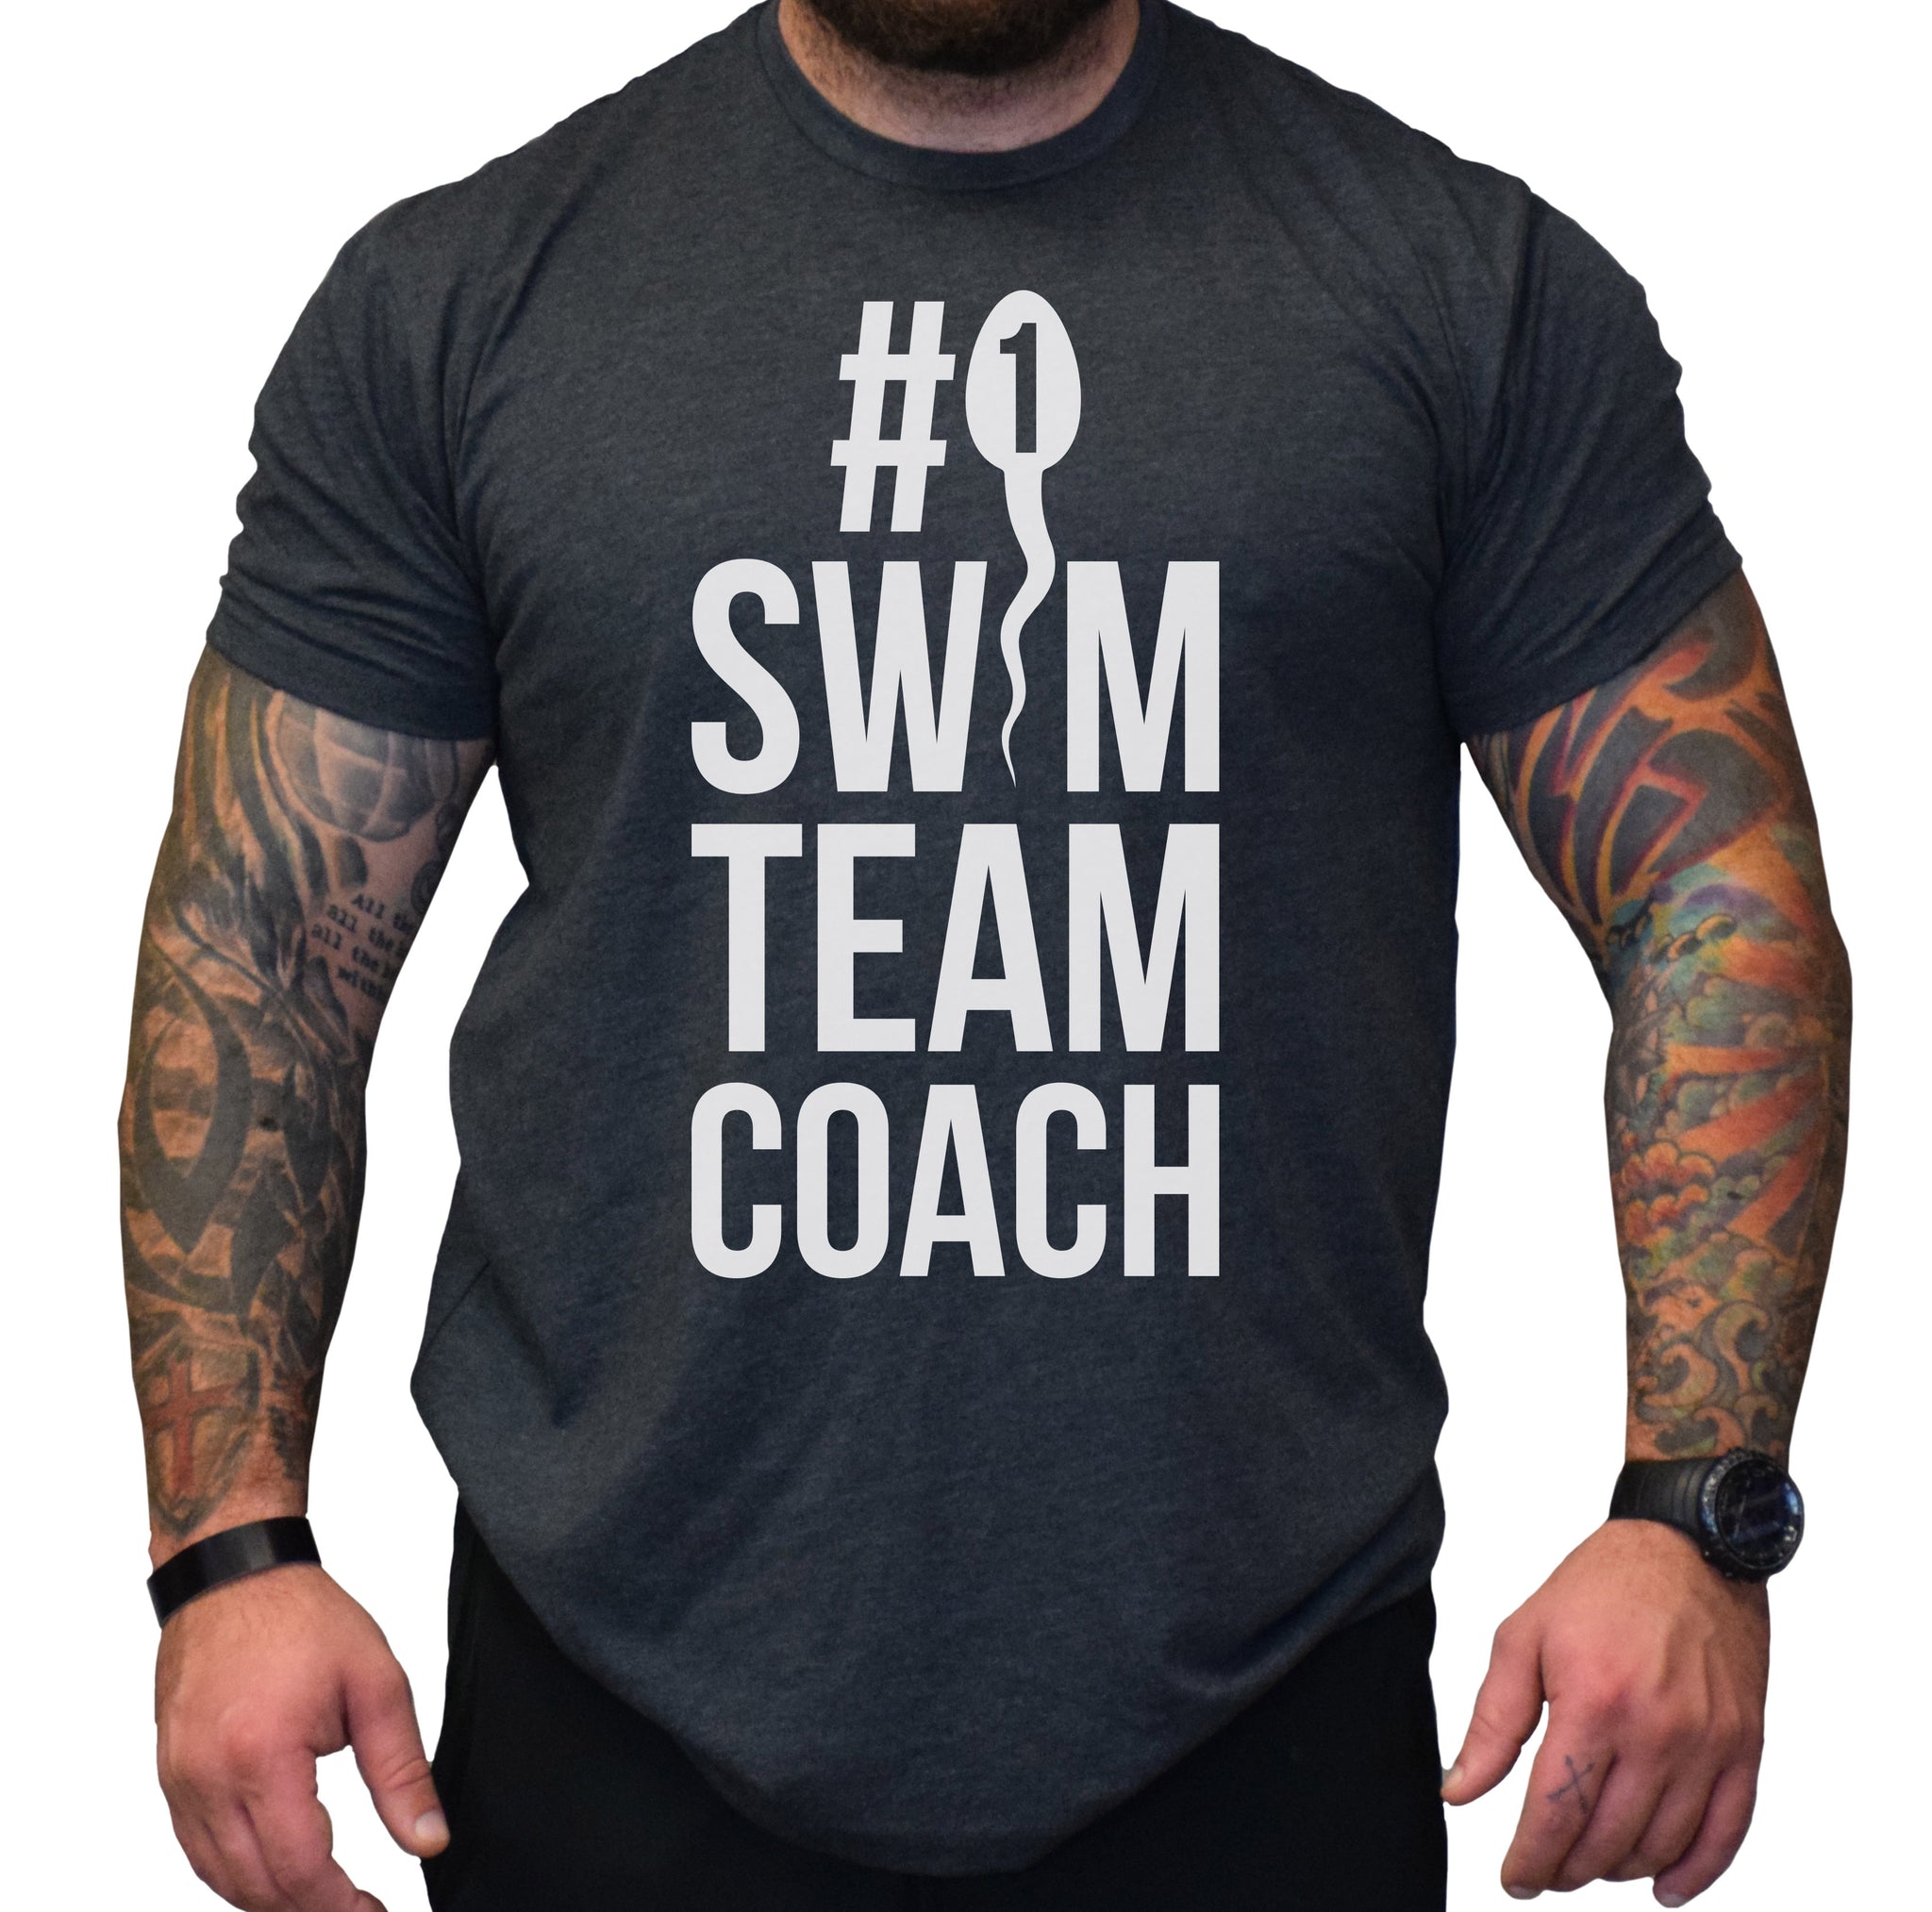 #1 Swim Team Coach